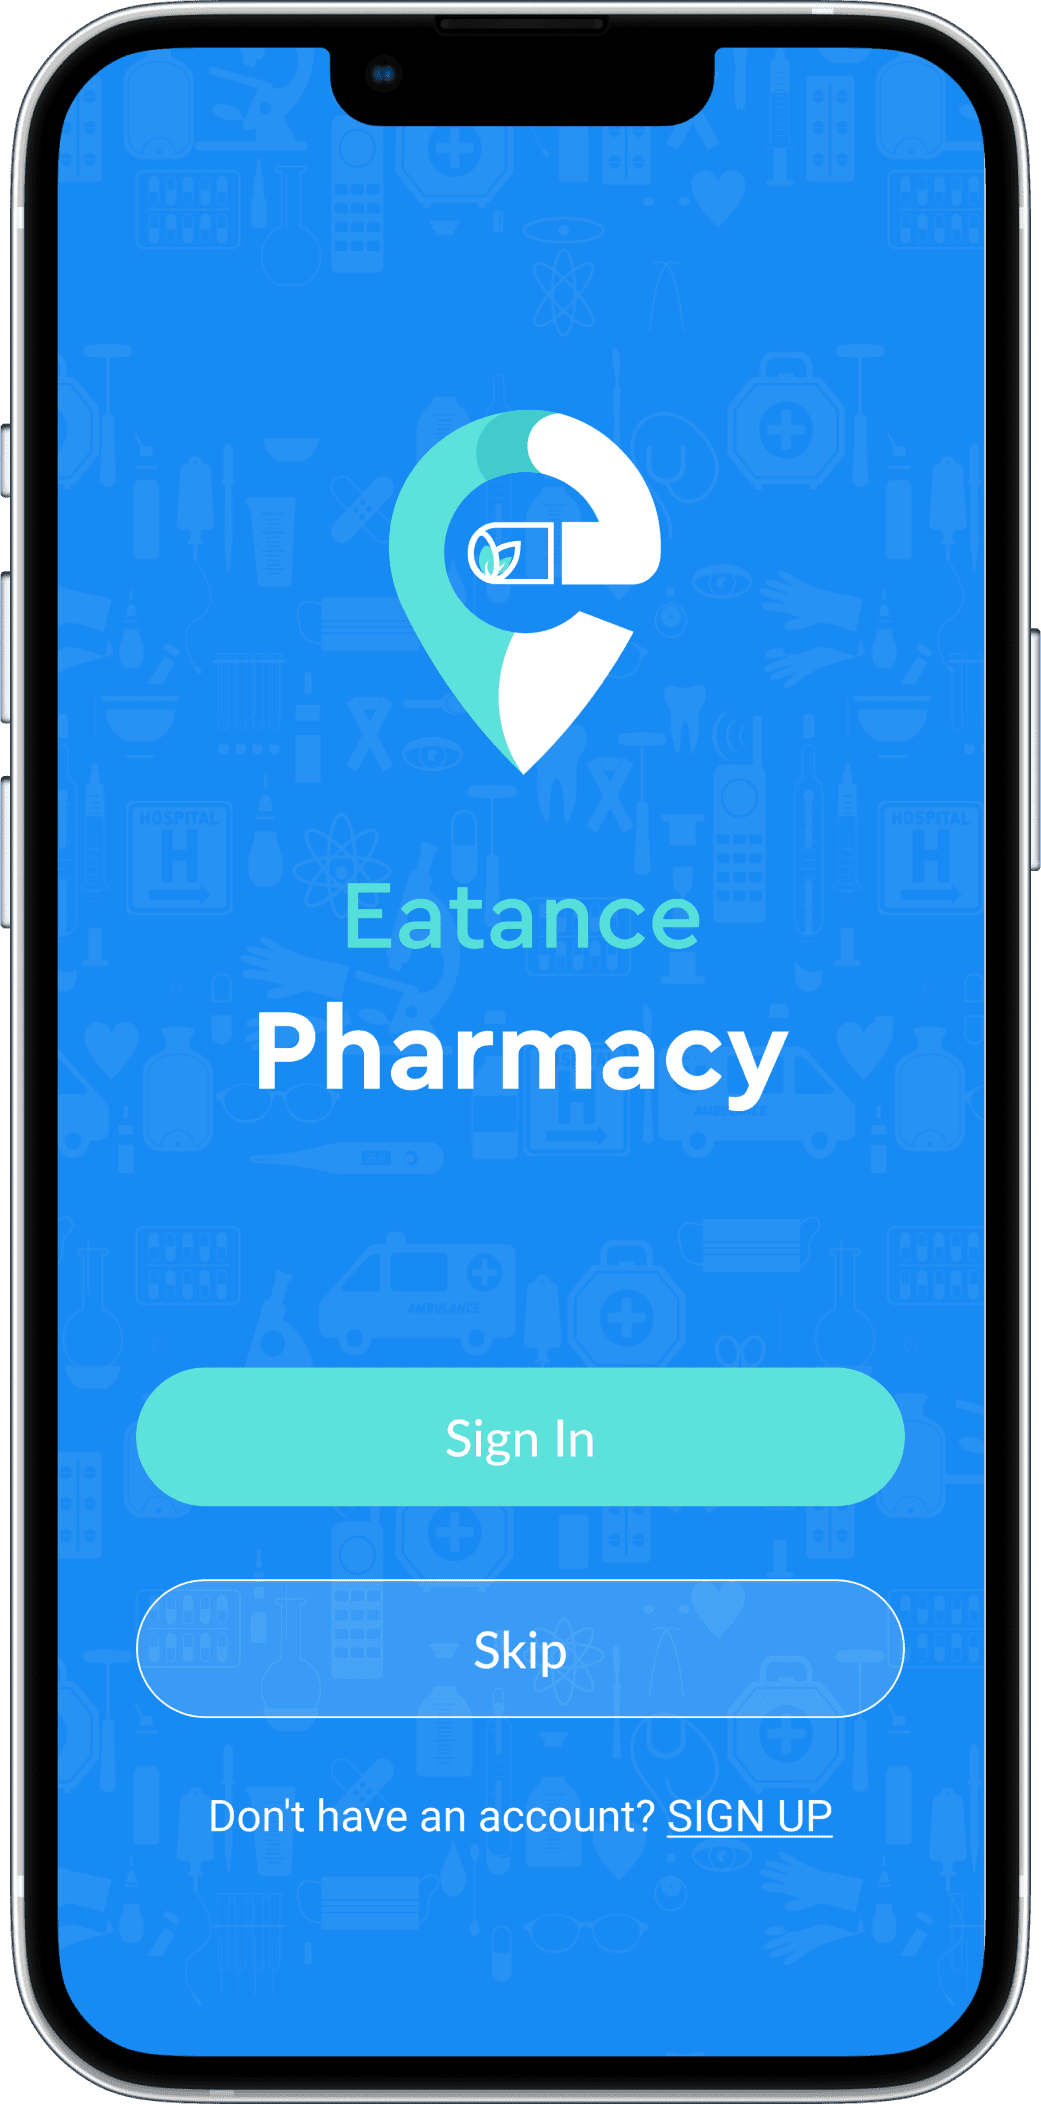 online pharmacy app Sign in screen